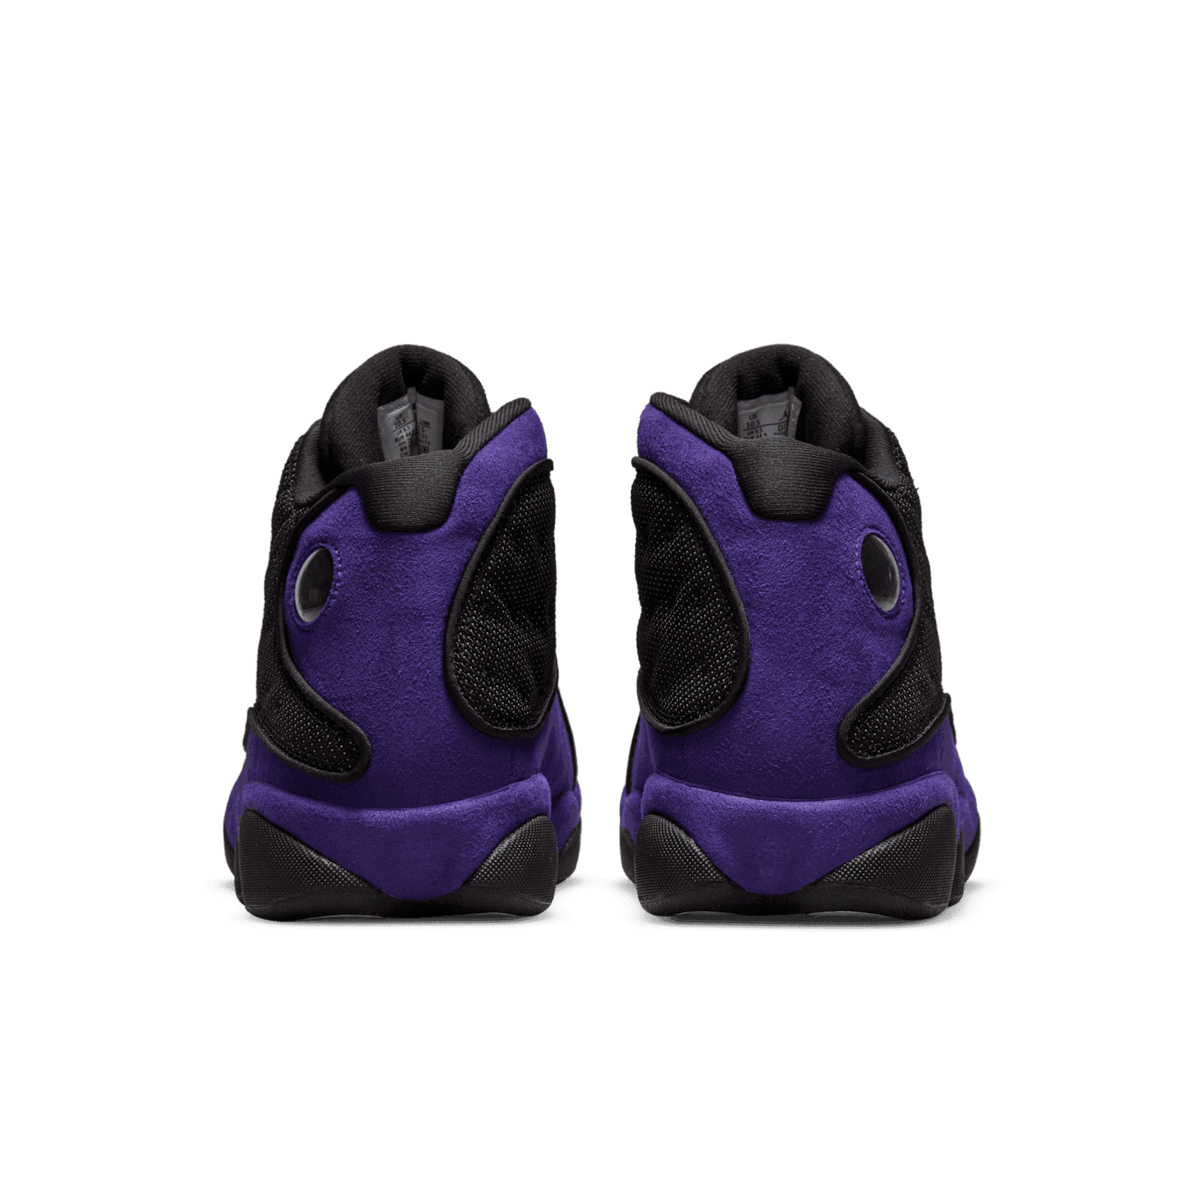 Jordan 13 Court Purple Angle 3